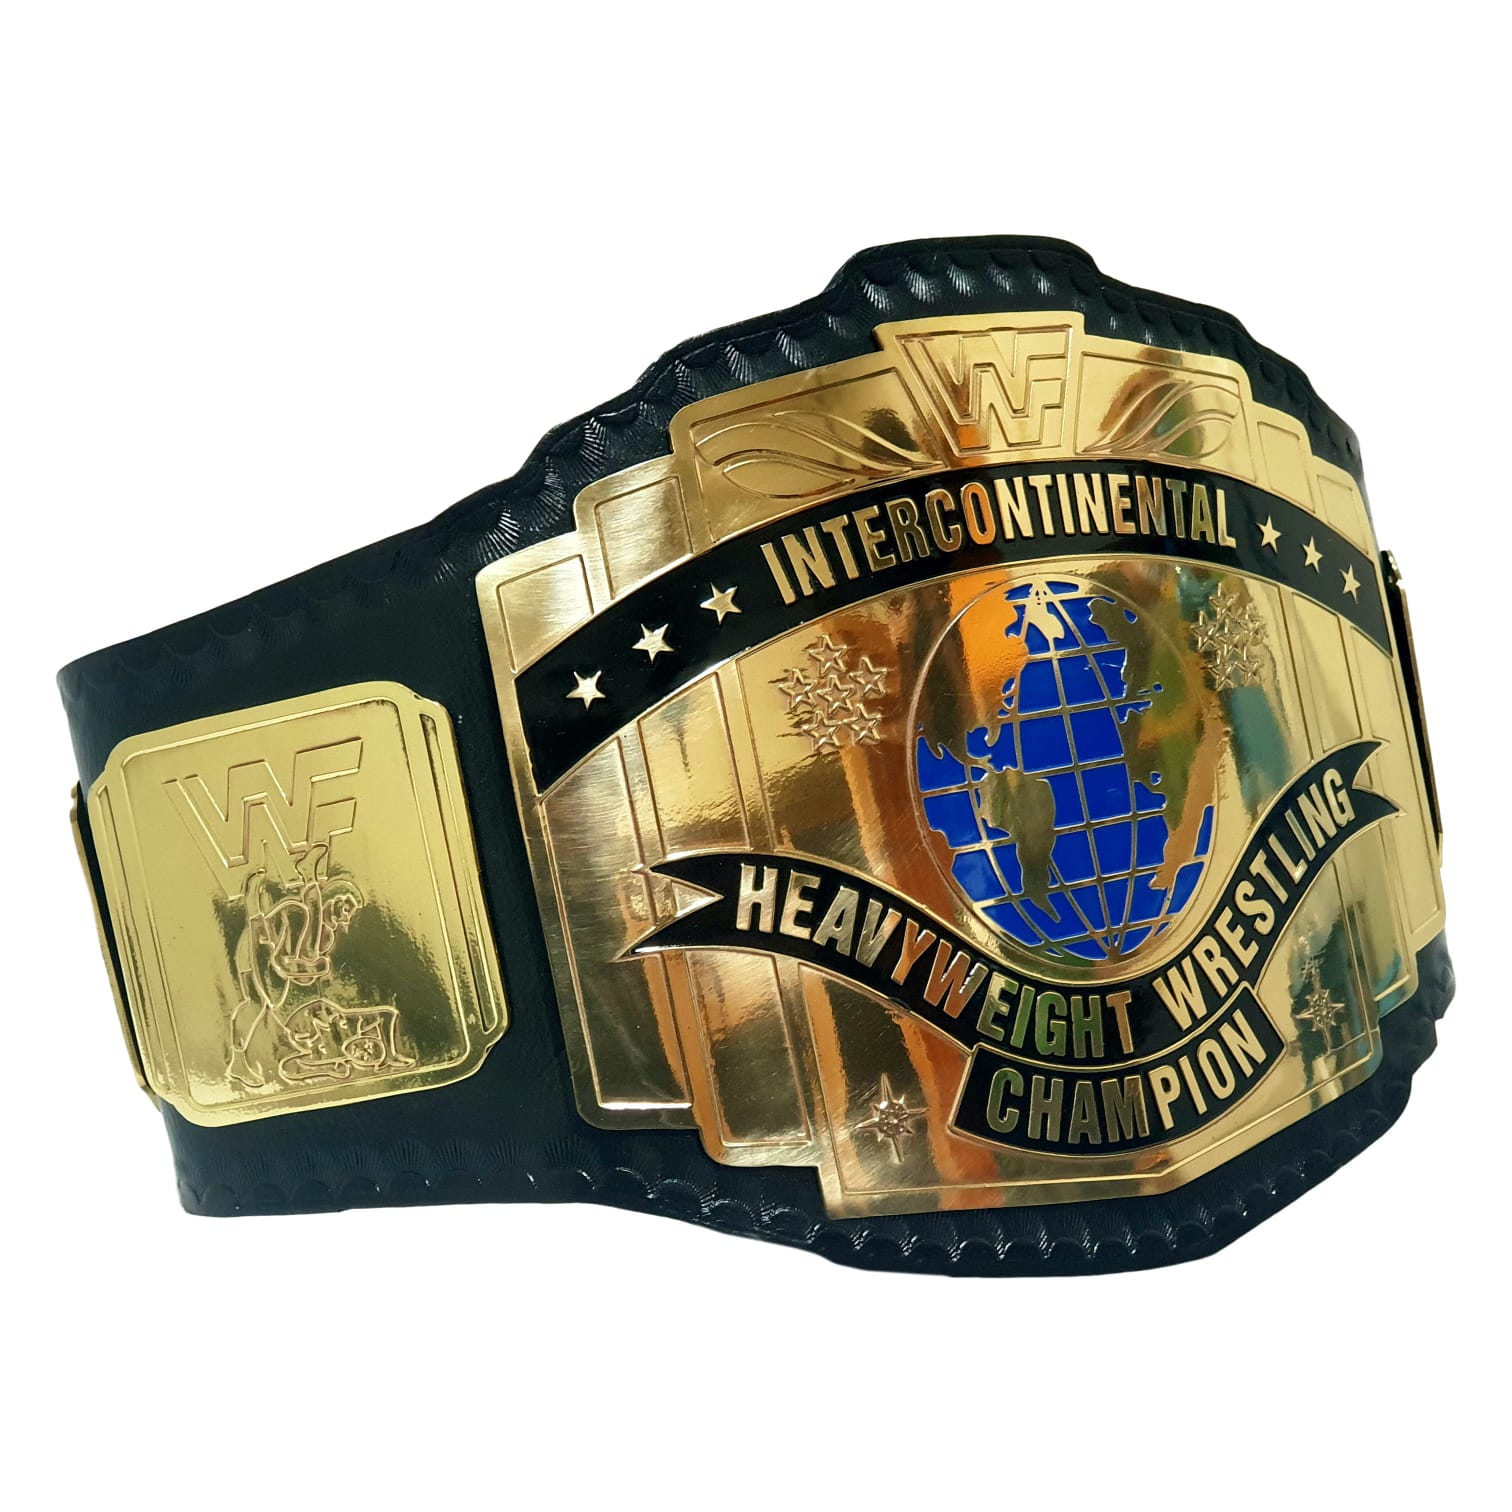 Wresling World's Greatest Championship Brass Belt-018